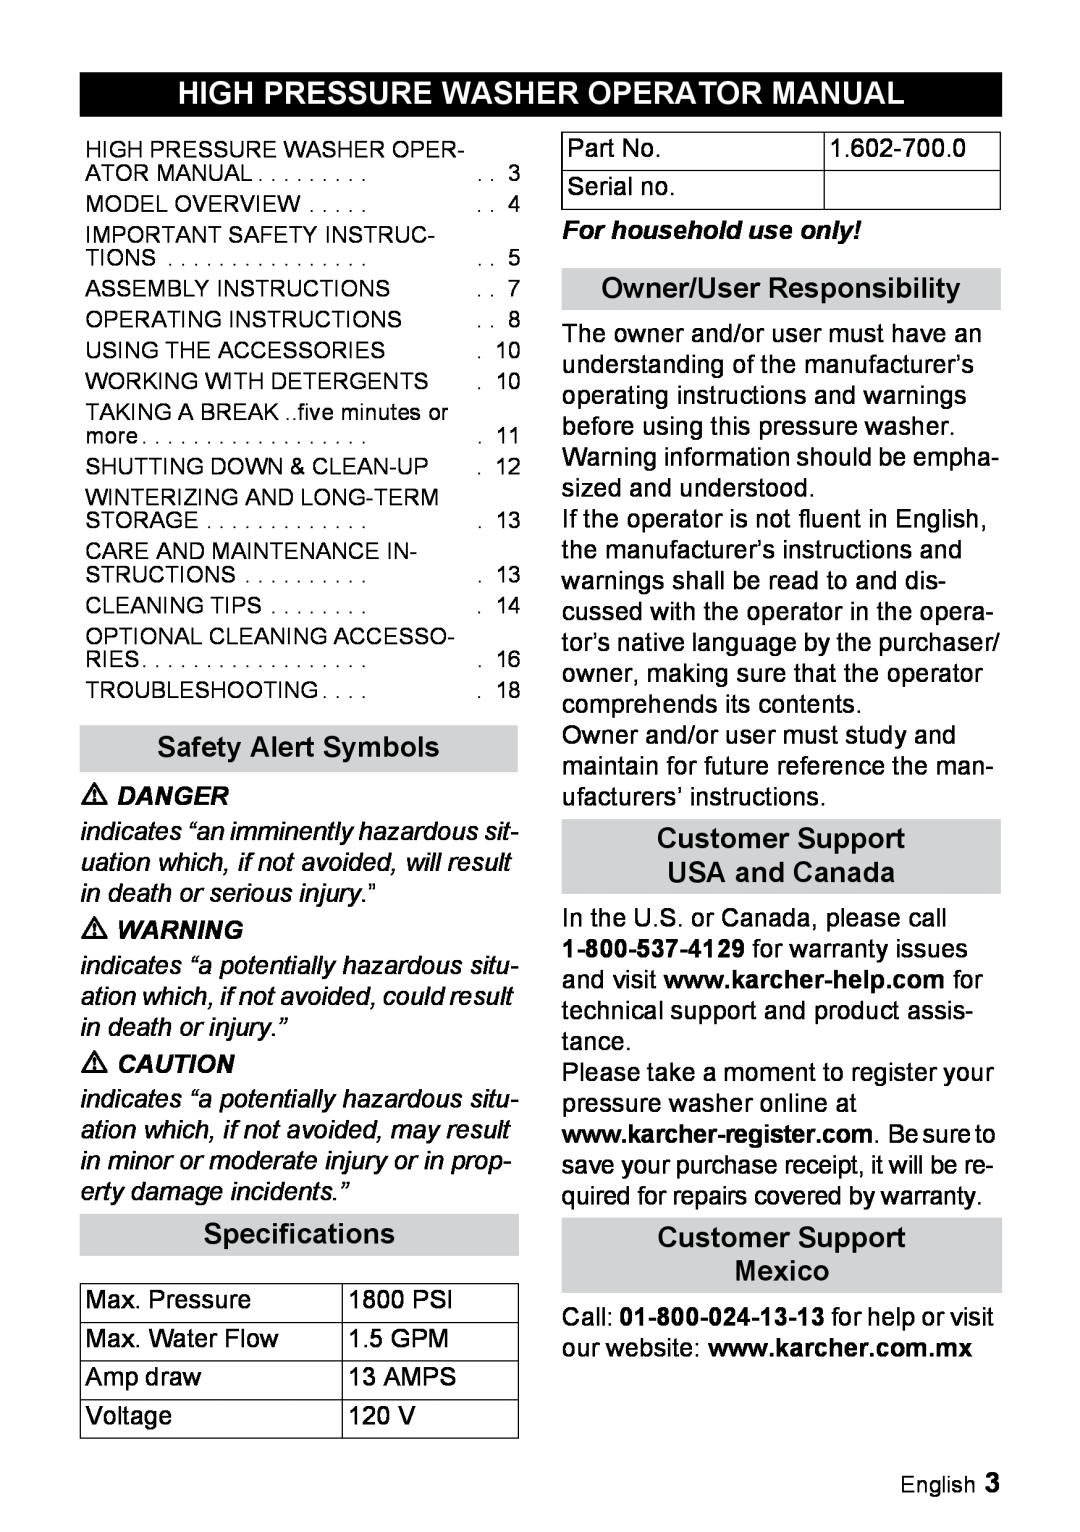 Karcher K 3.350 High Pressure Washer Operator Manual, Safety Alert Symbols, Specifications, Owner/User Responsibility 